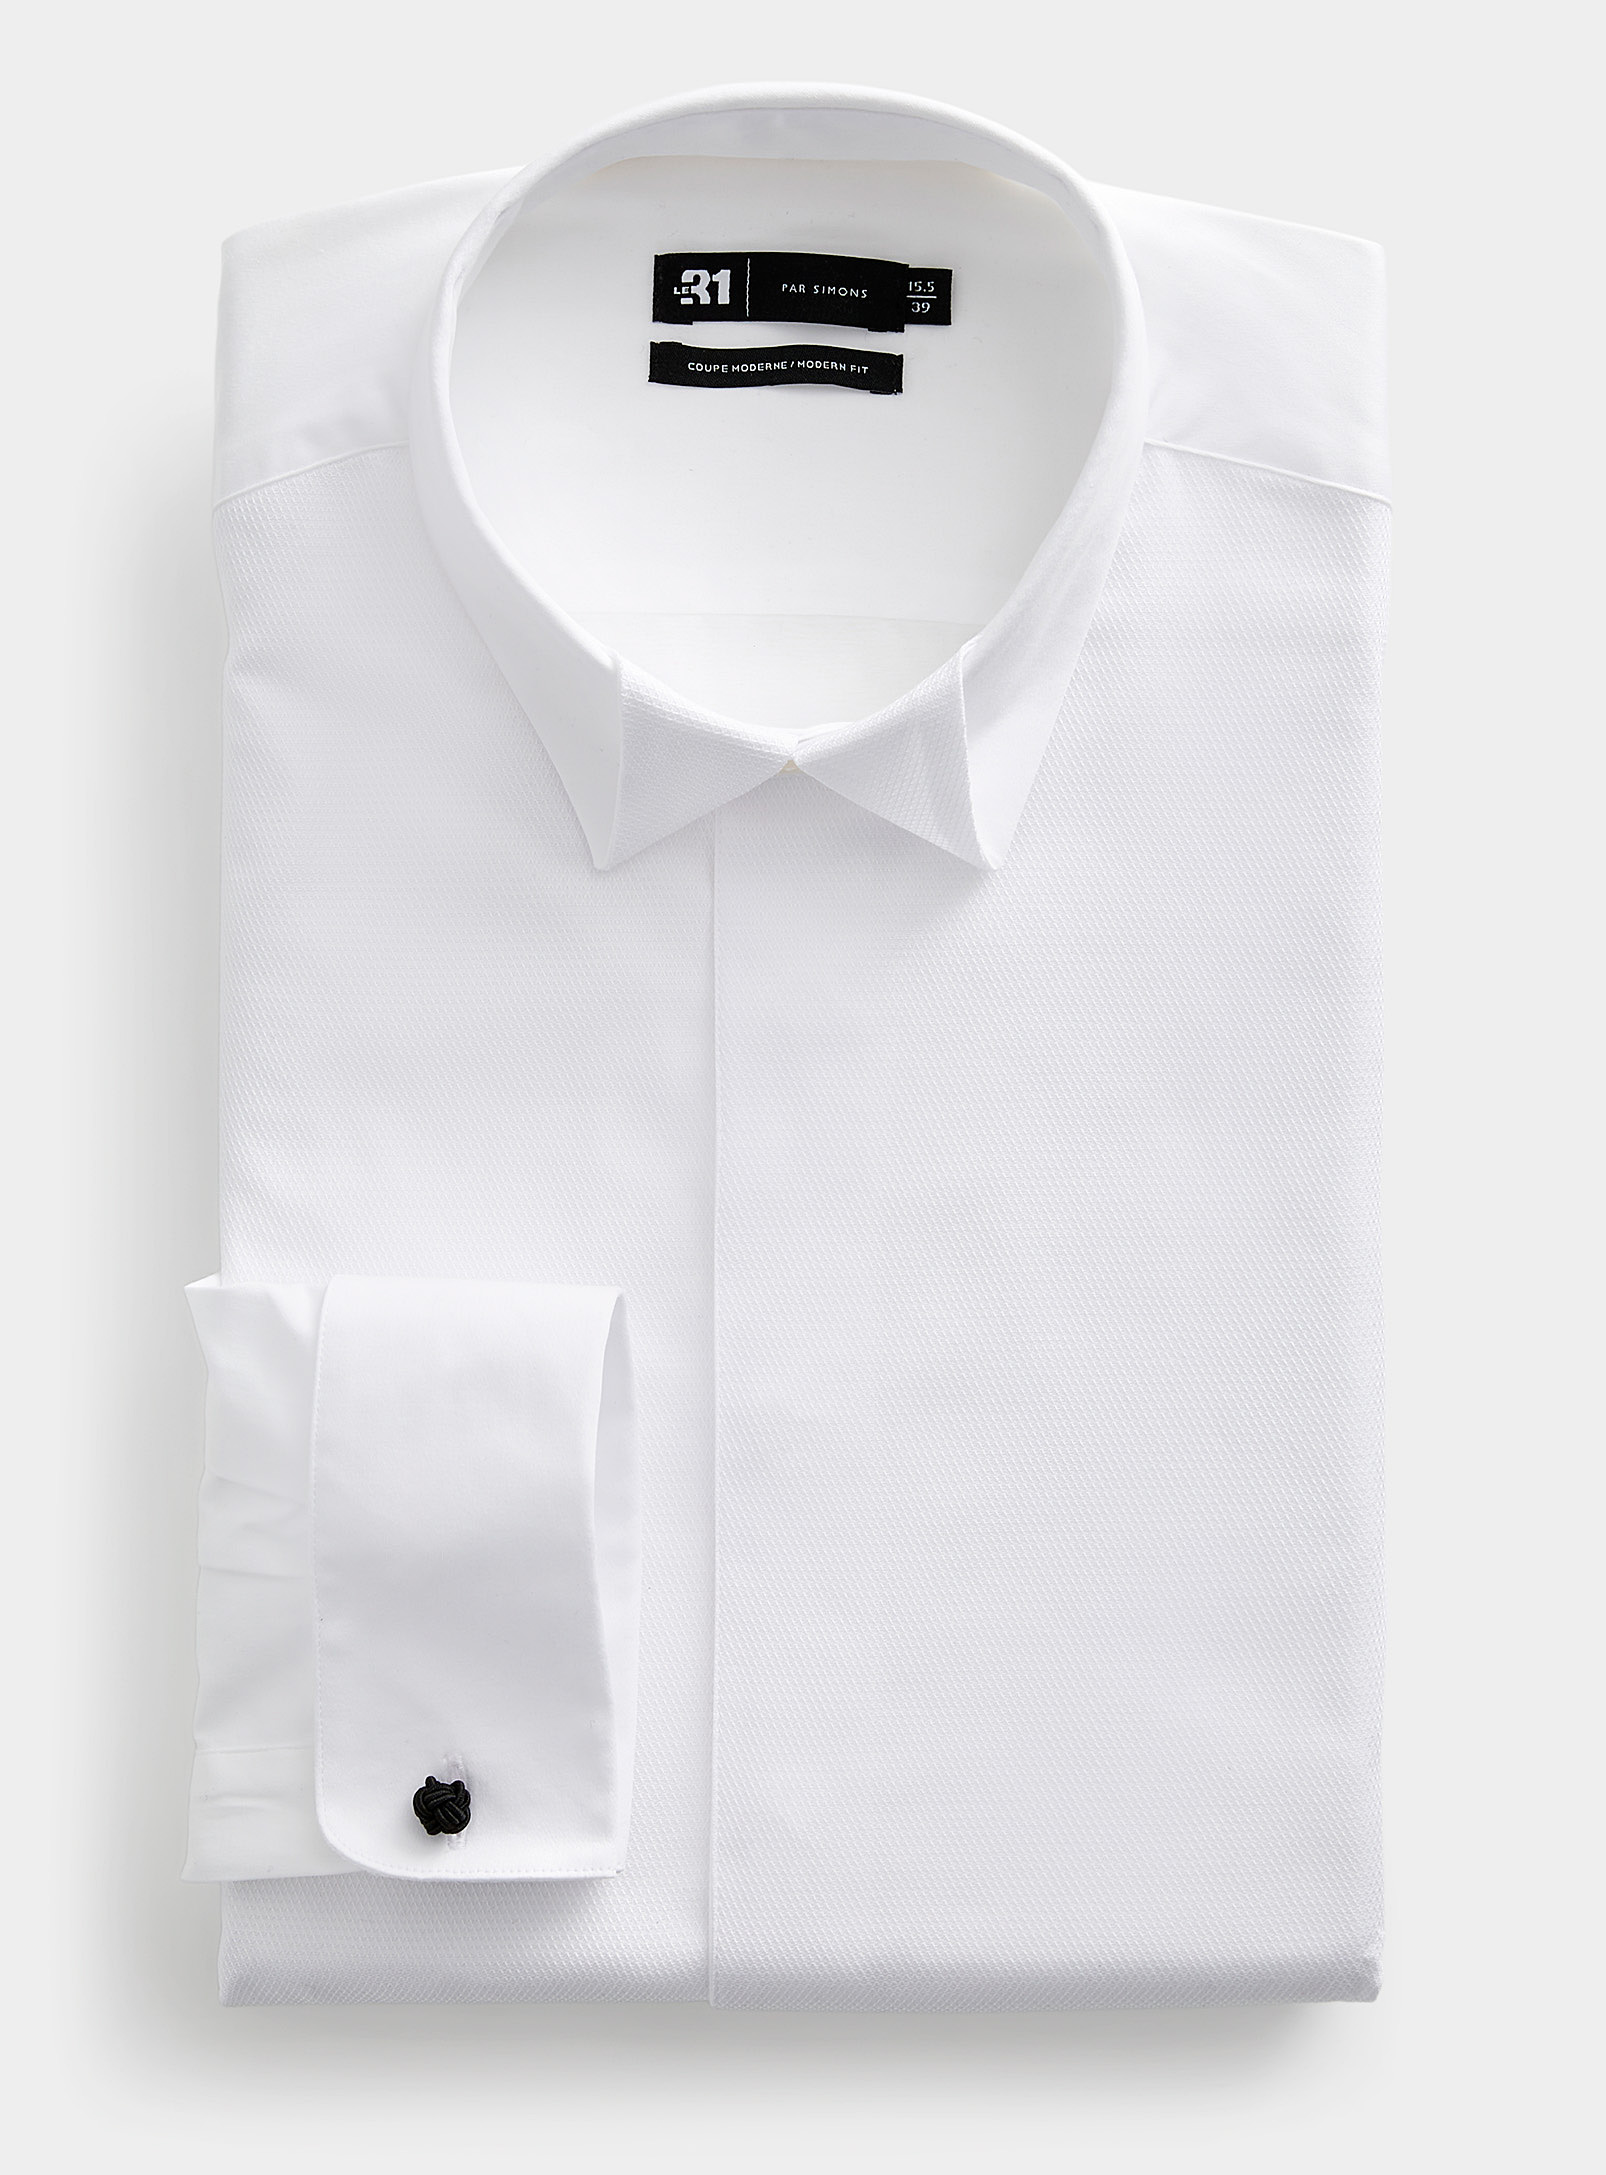 Le 31 - Men's Origami collar tuxedo shirt Modern fit